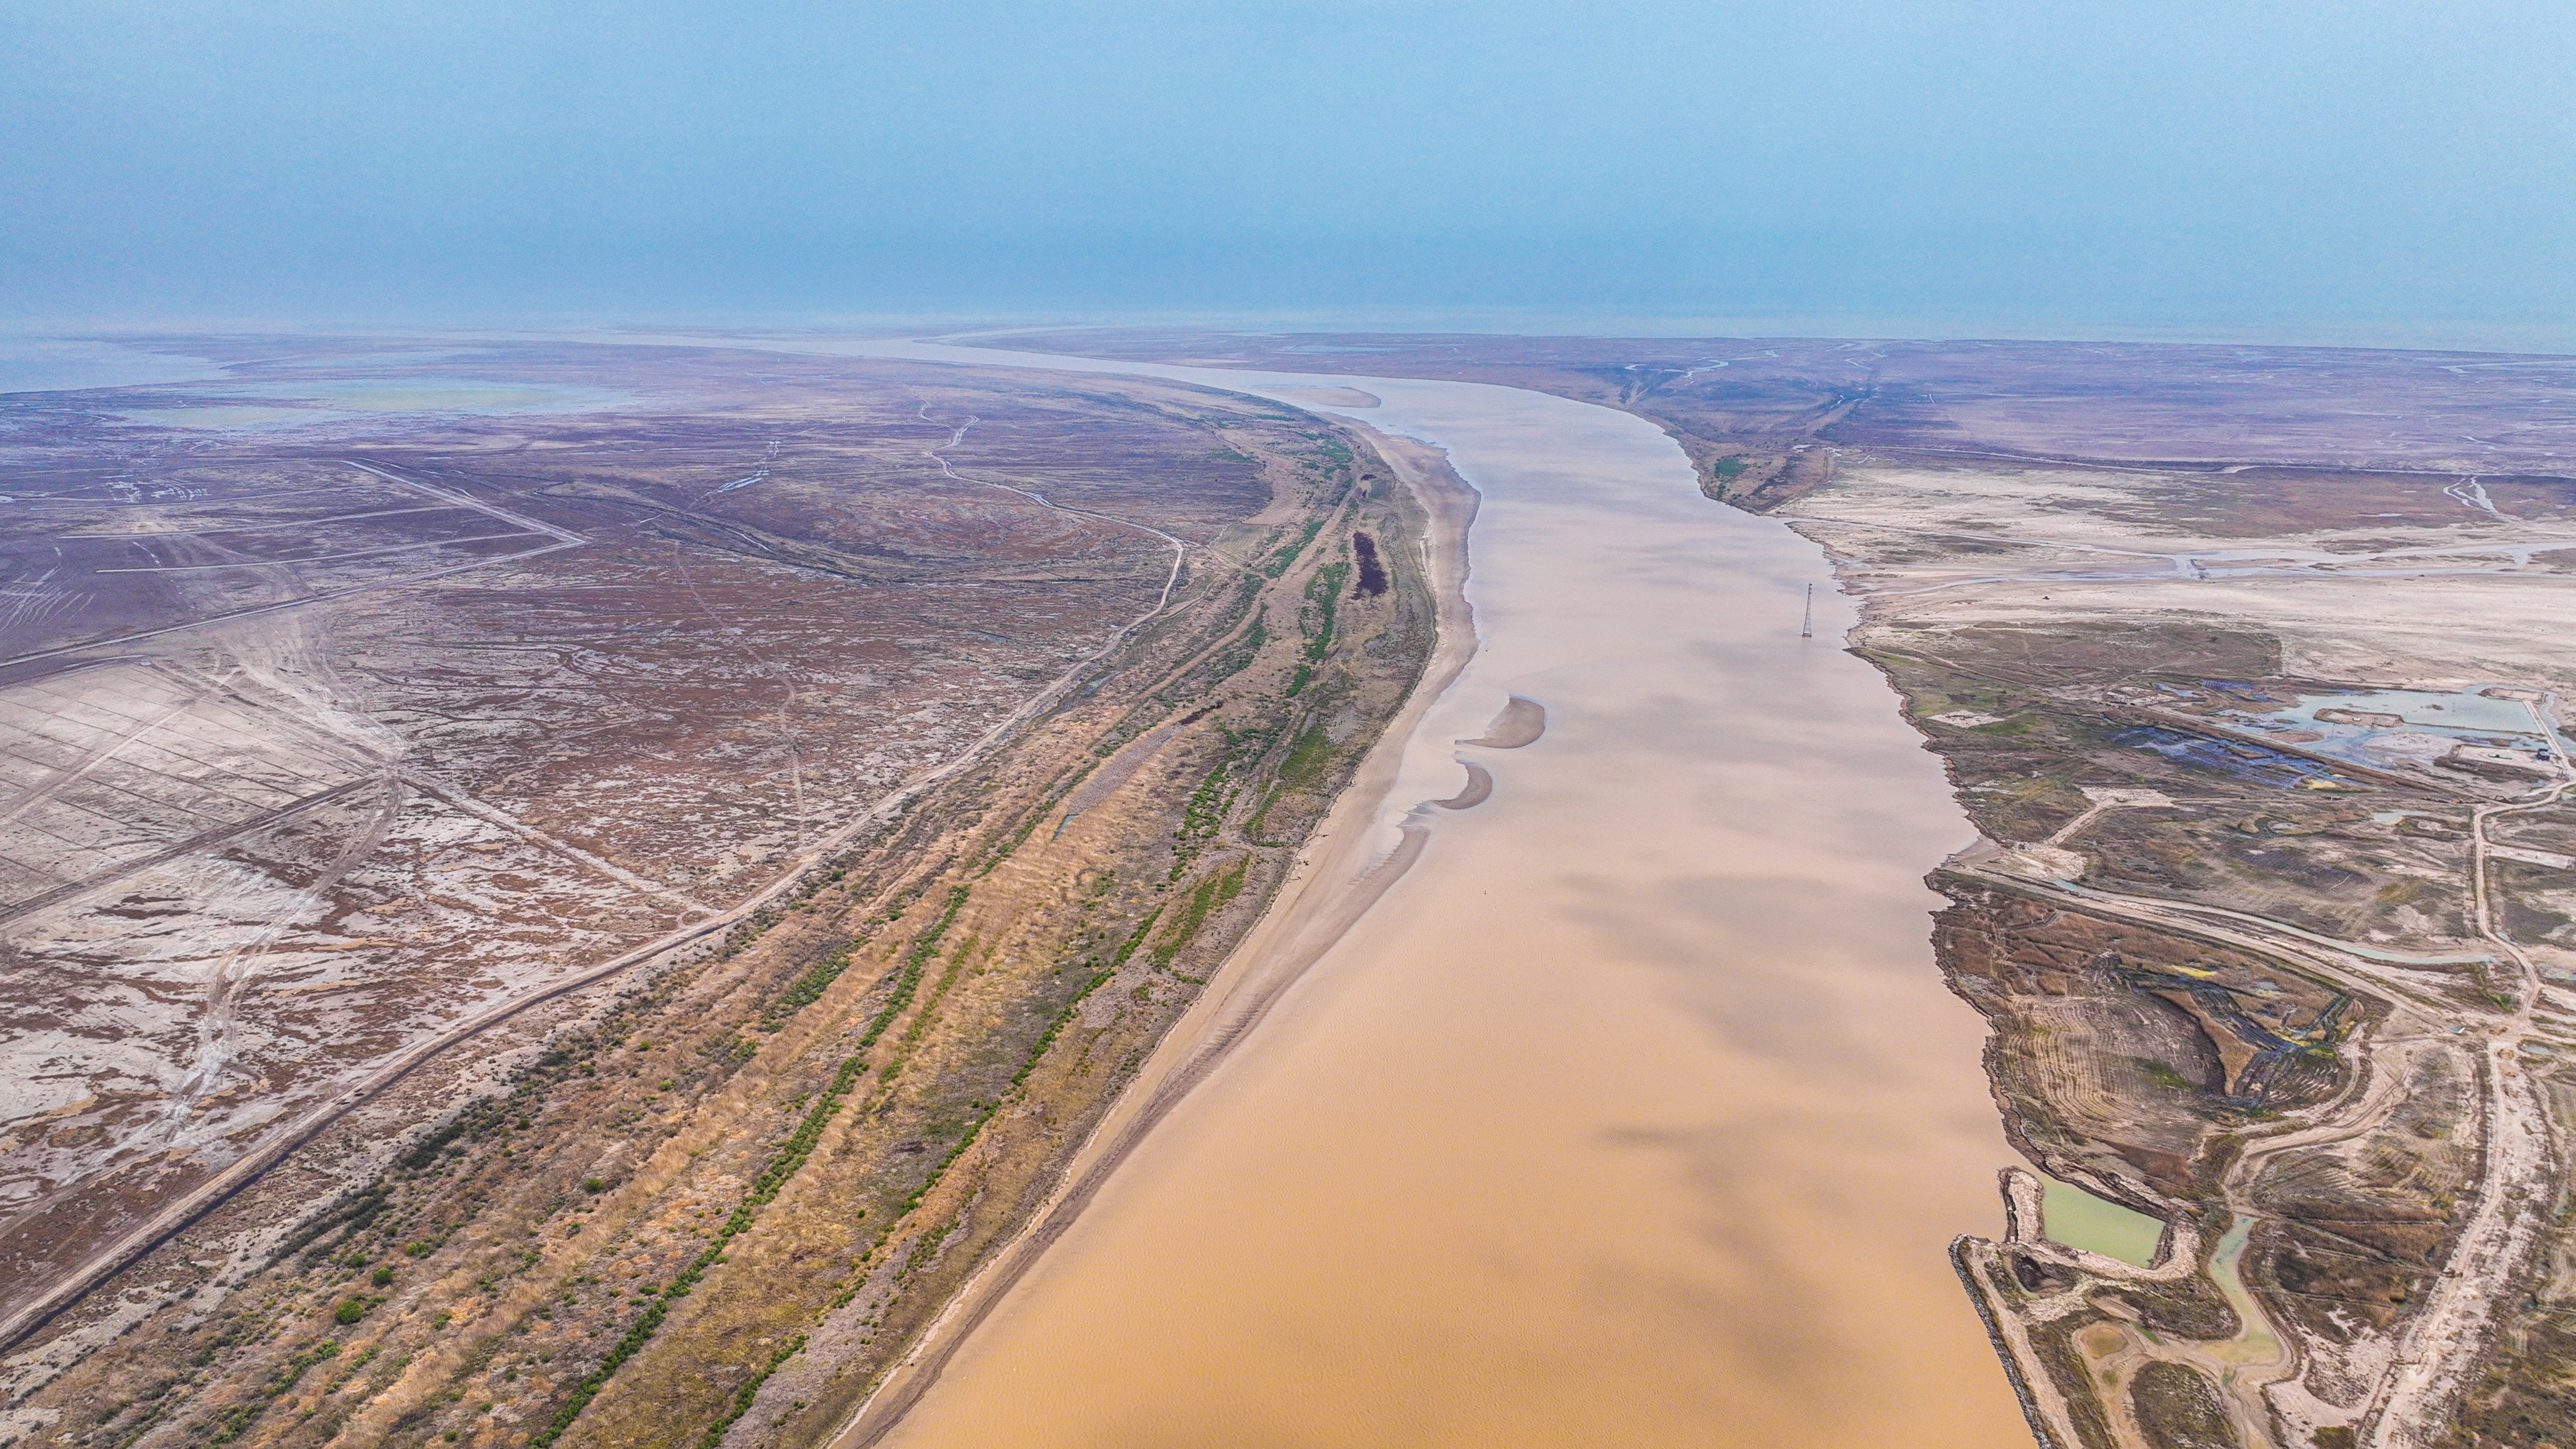 Bird's-eye view of Yellow River Delta